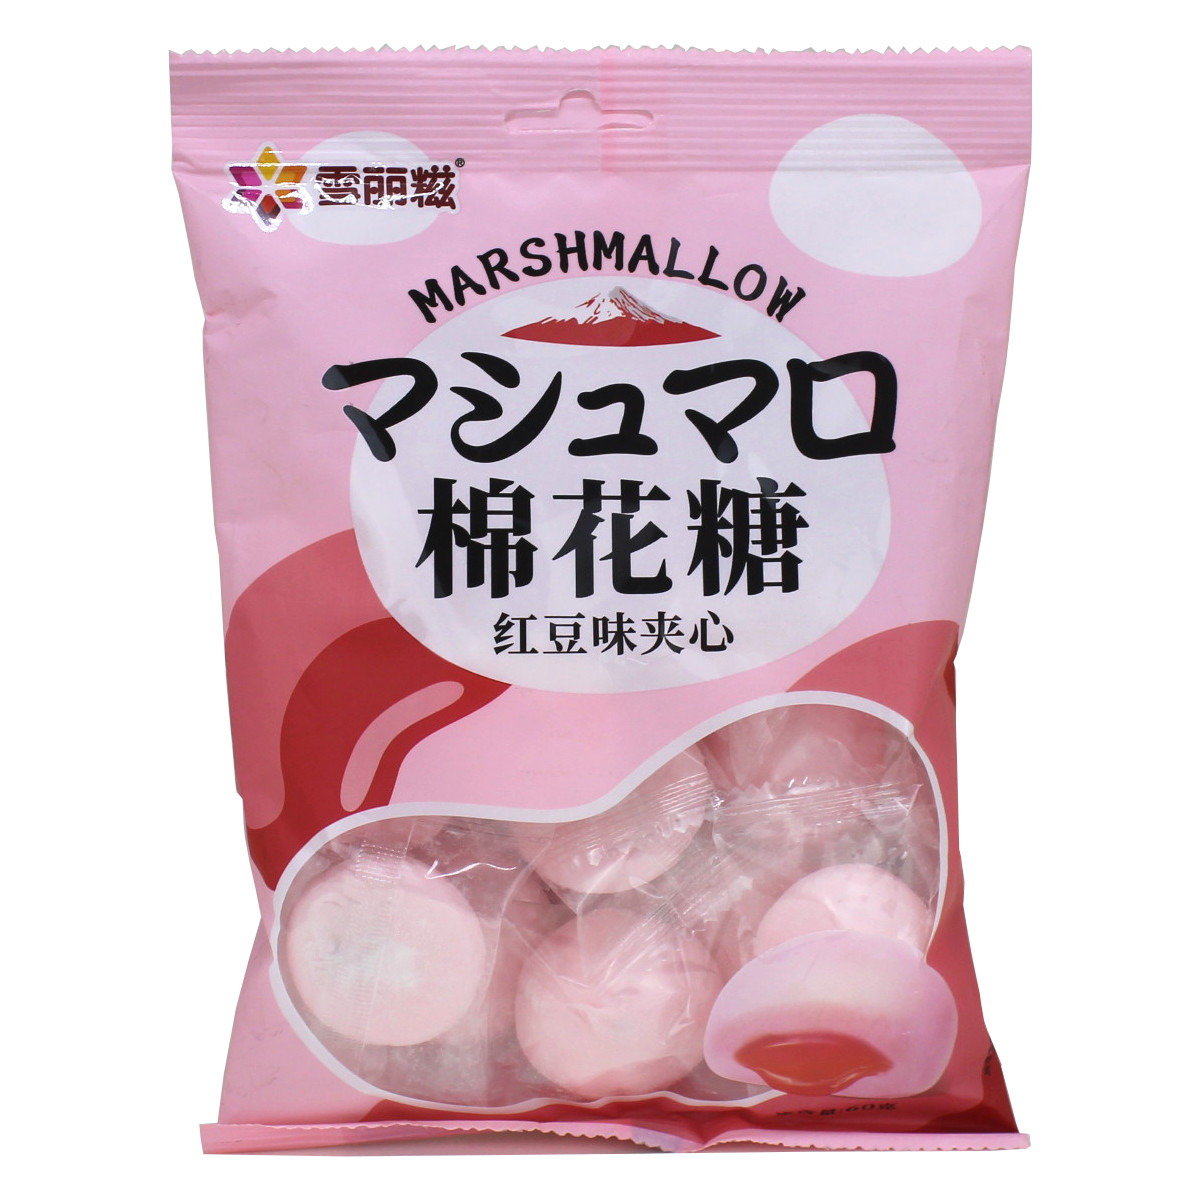 Marshmallow Recheado com Feijão Azuki - 60 gramas